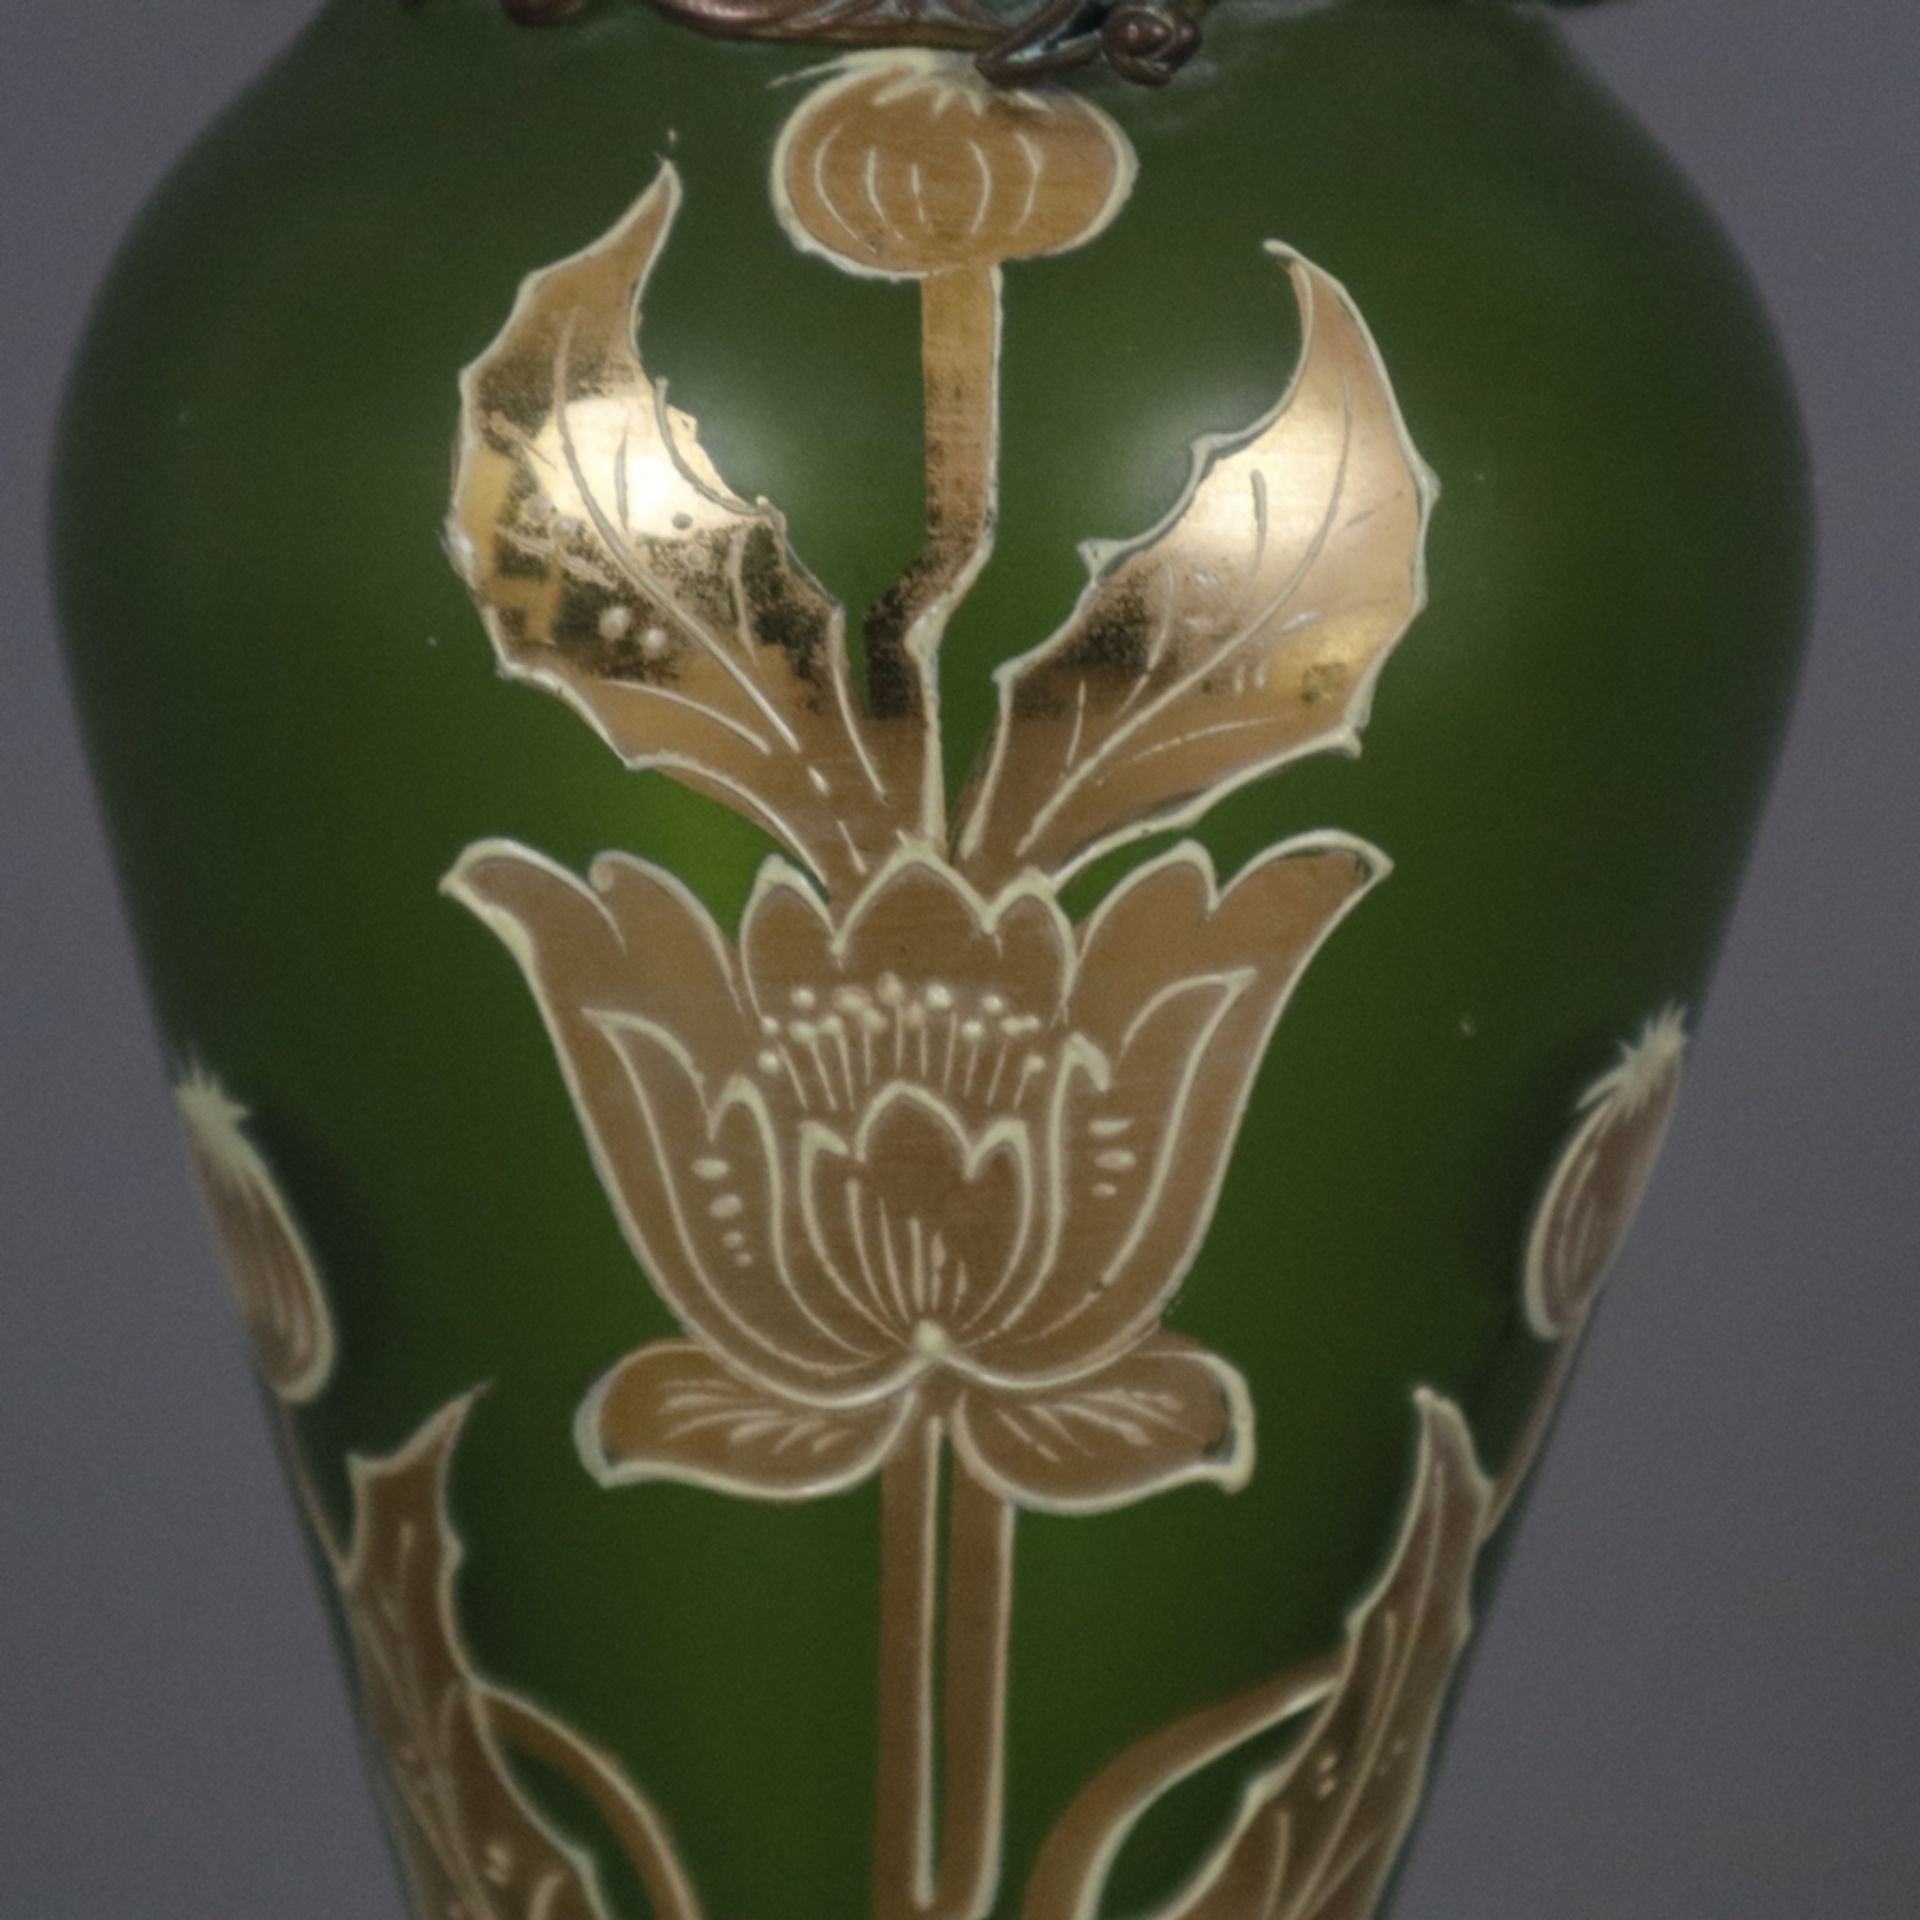 Jugendstil-Glasvase mit Metallmontur - wohl Frankreich um 1900, Klarglas mit grünem Unterfang, scha - Image 4 of 8